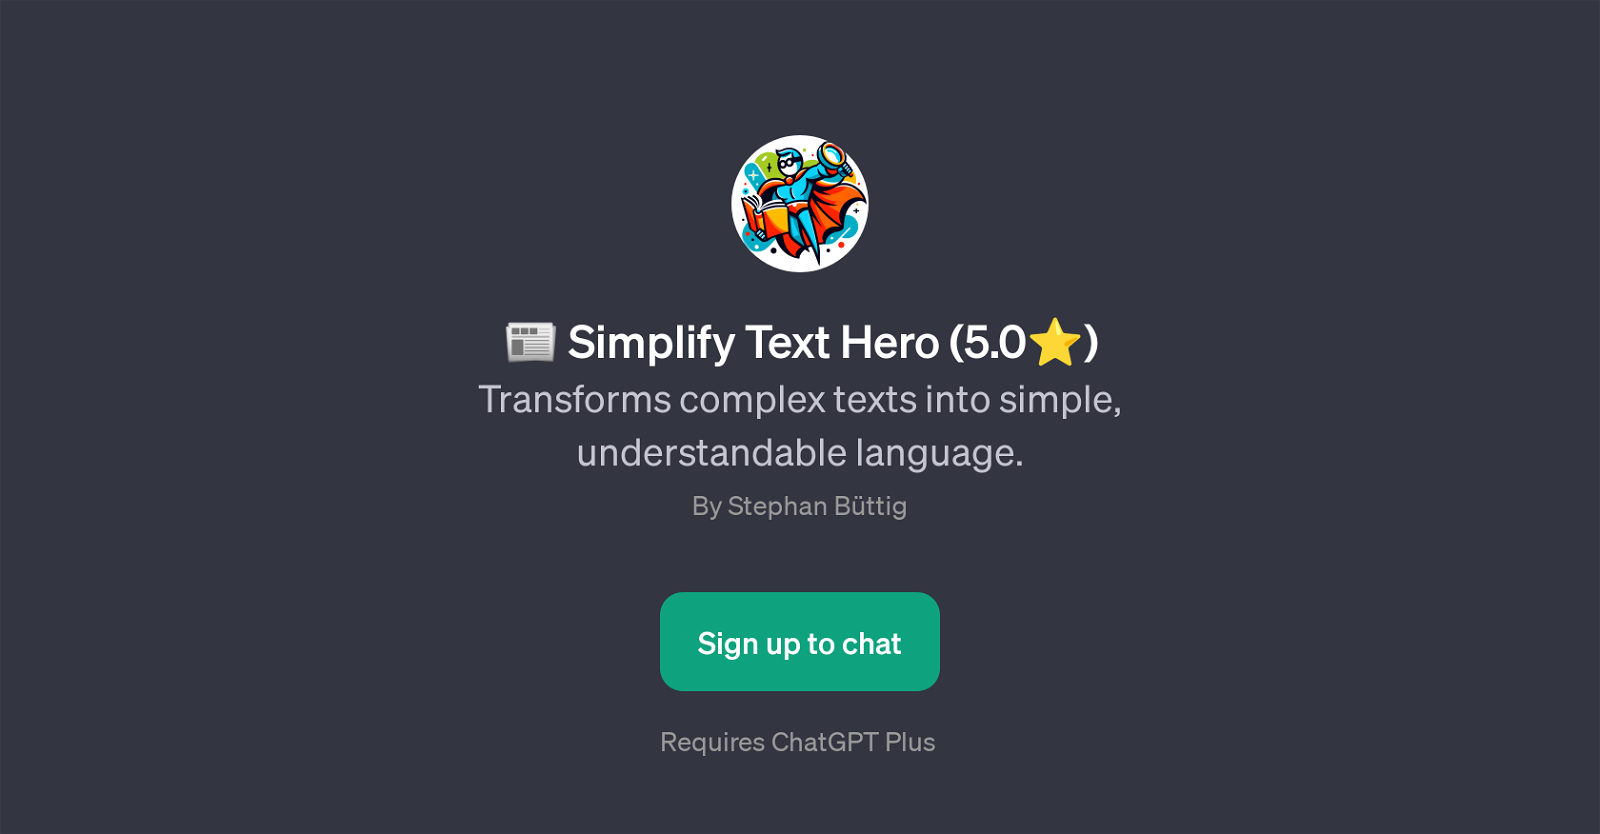 Simplify Text Hero website